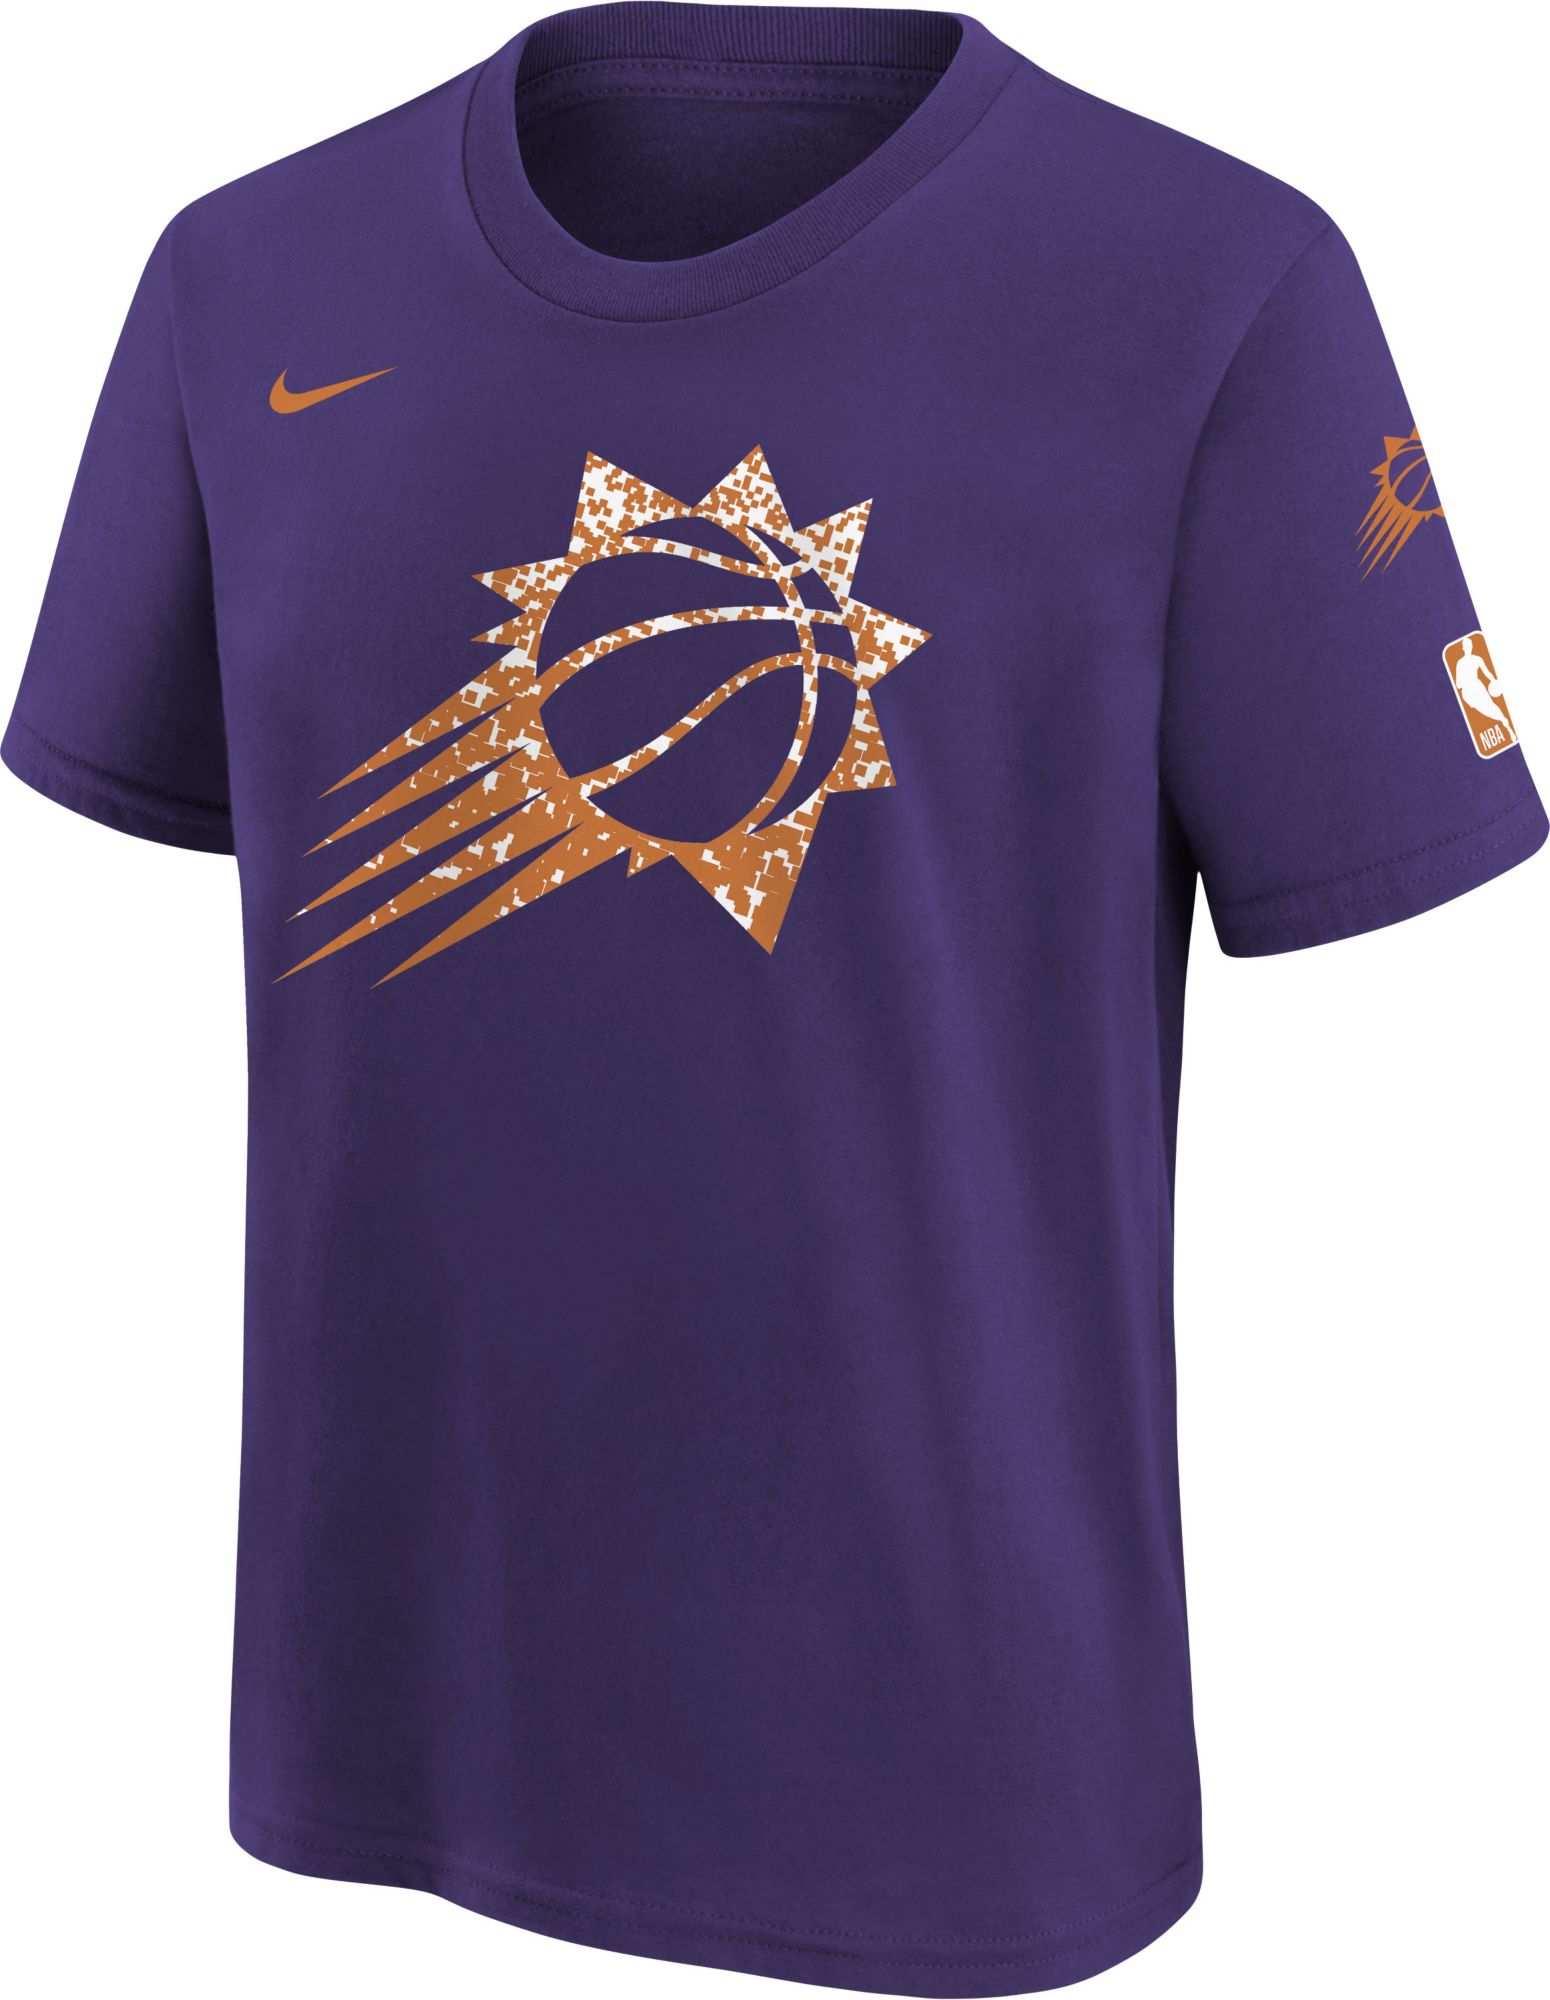 Nike Youth Phoenix Suns Essential Logo T-Shirt